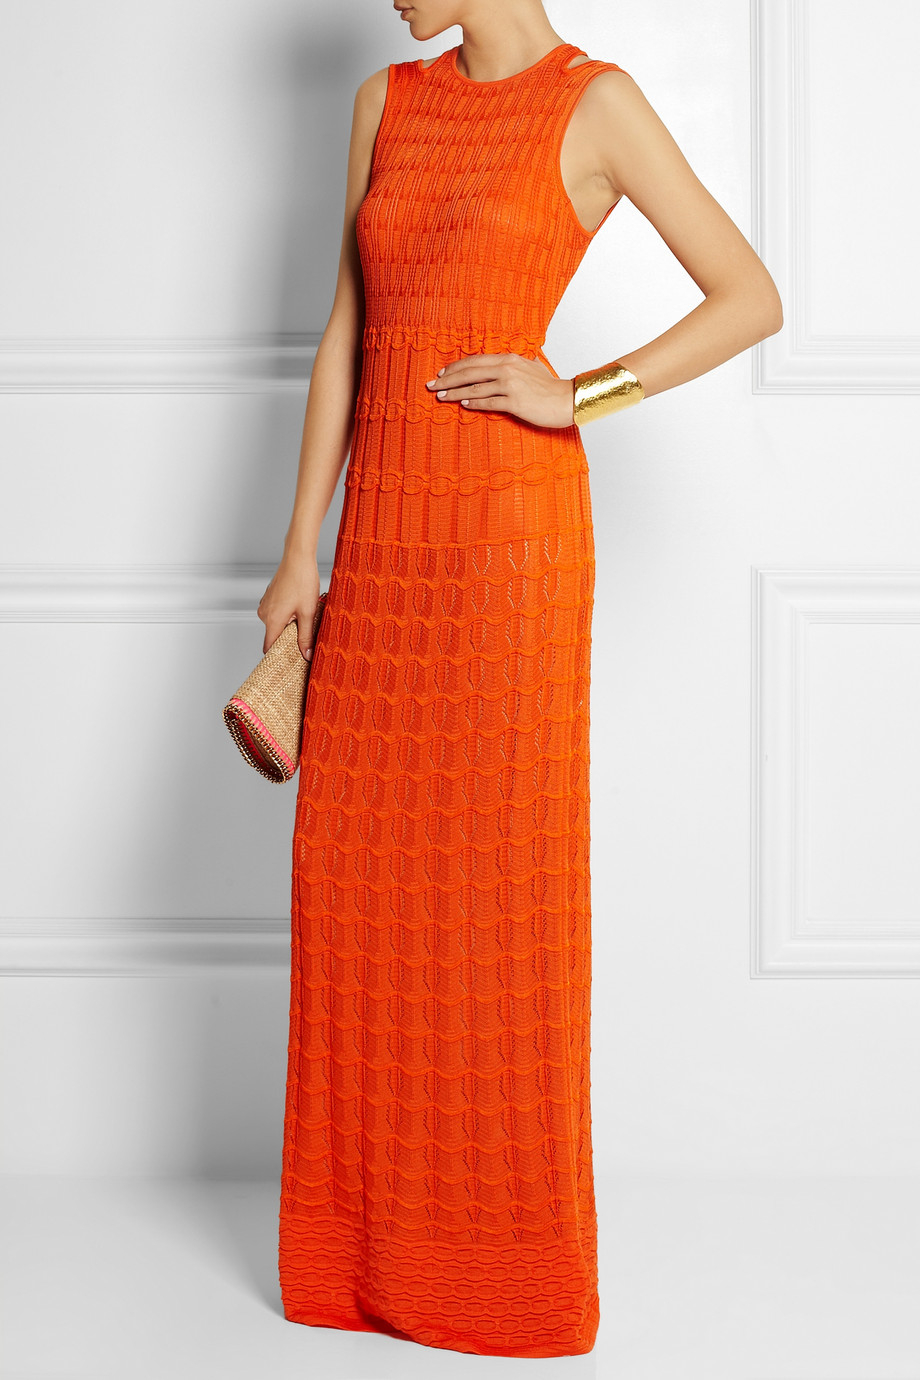 M missoni Crochet-Knit Cotton-Blend Maxi Dress in Orange | Lyst